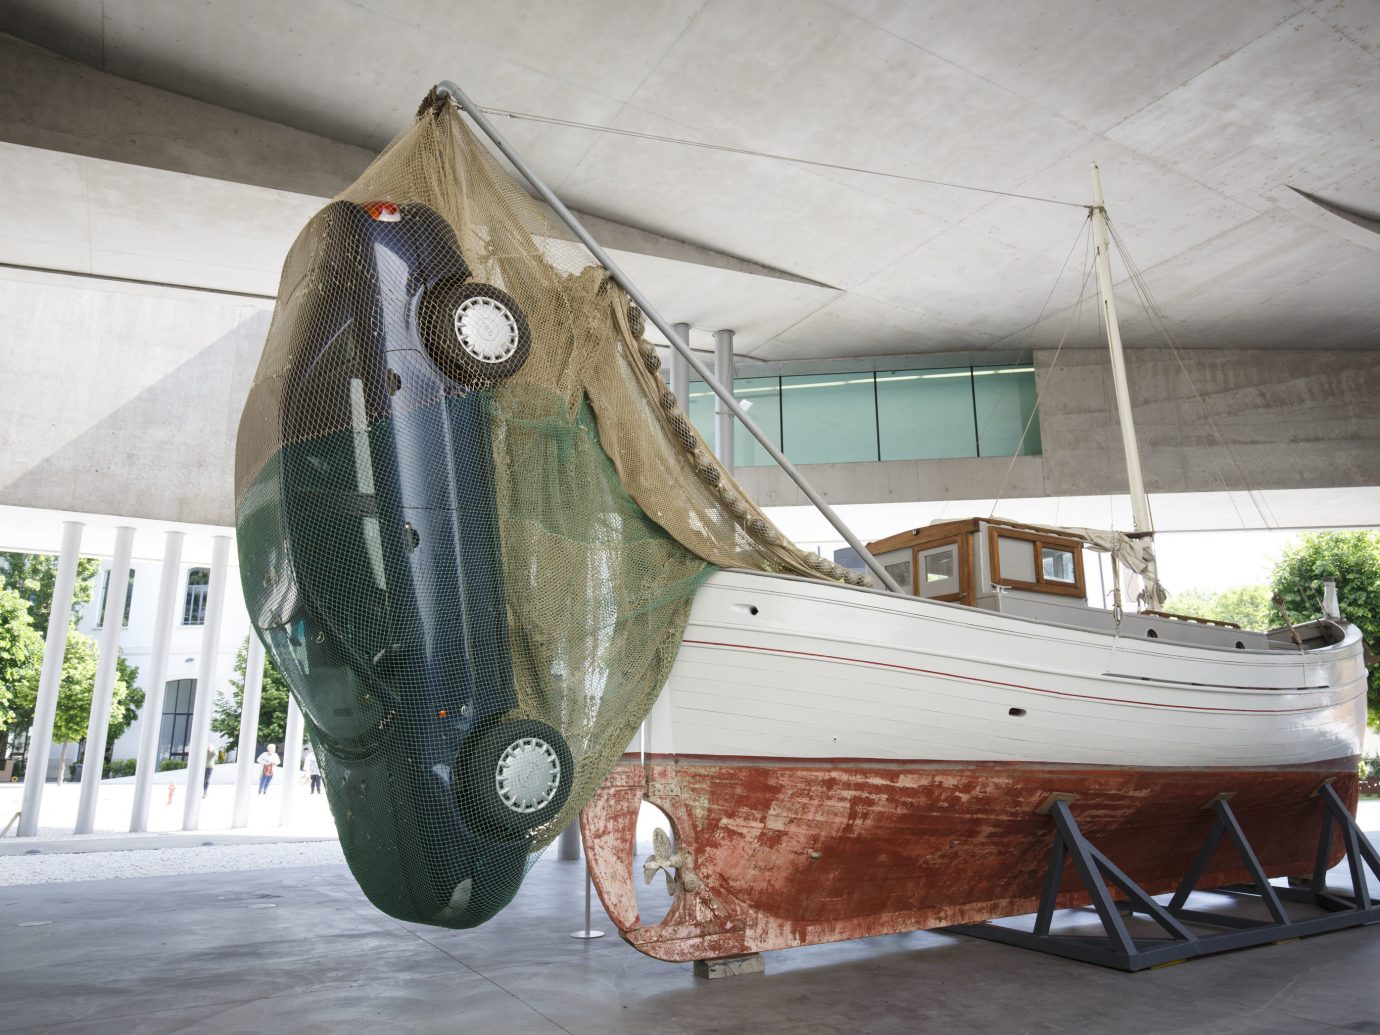 Arts + Culture indoor vehicle Boat